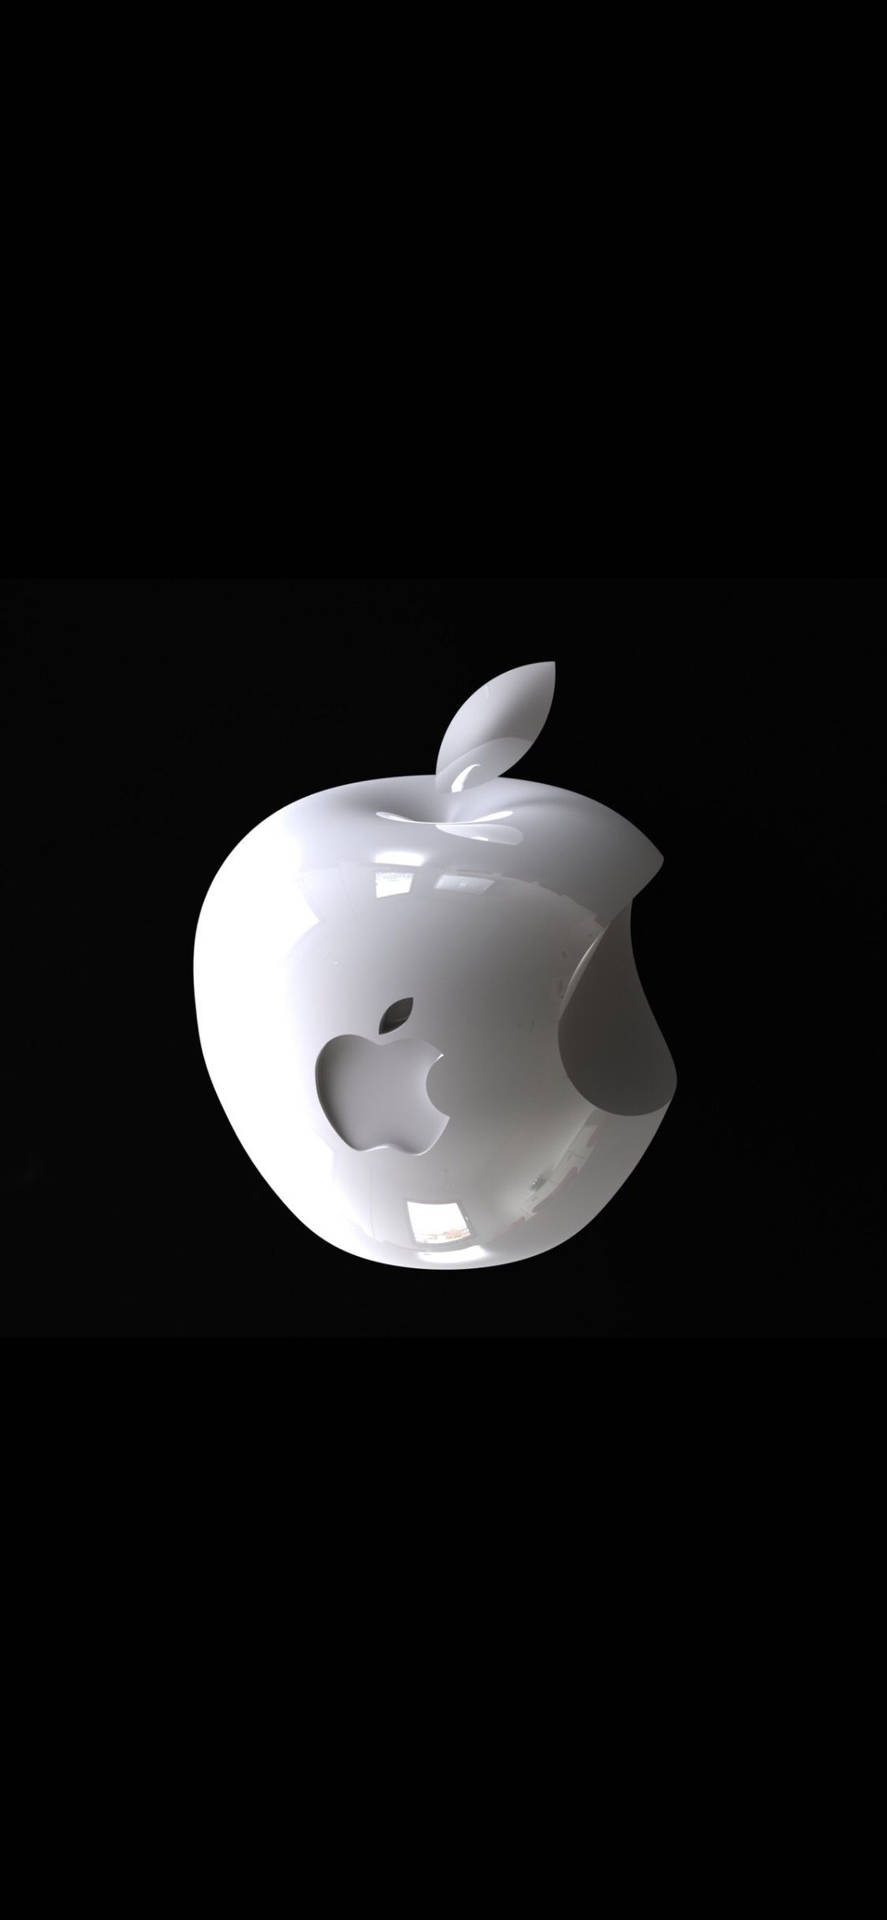 3d Apple Iphone Logo On Apple